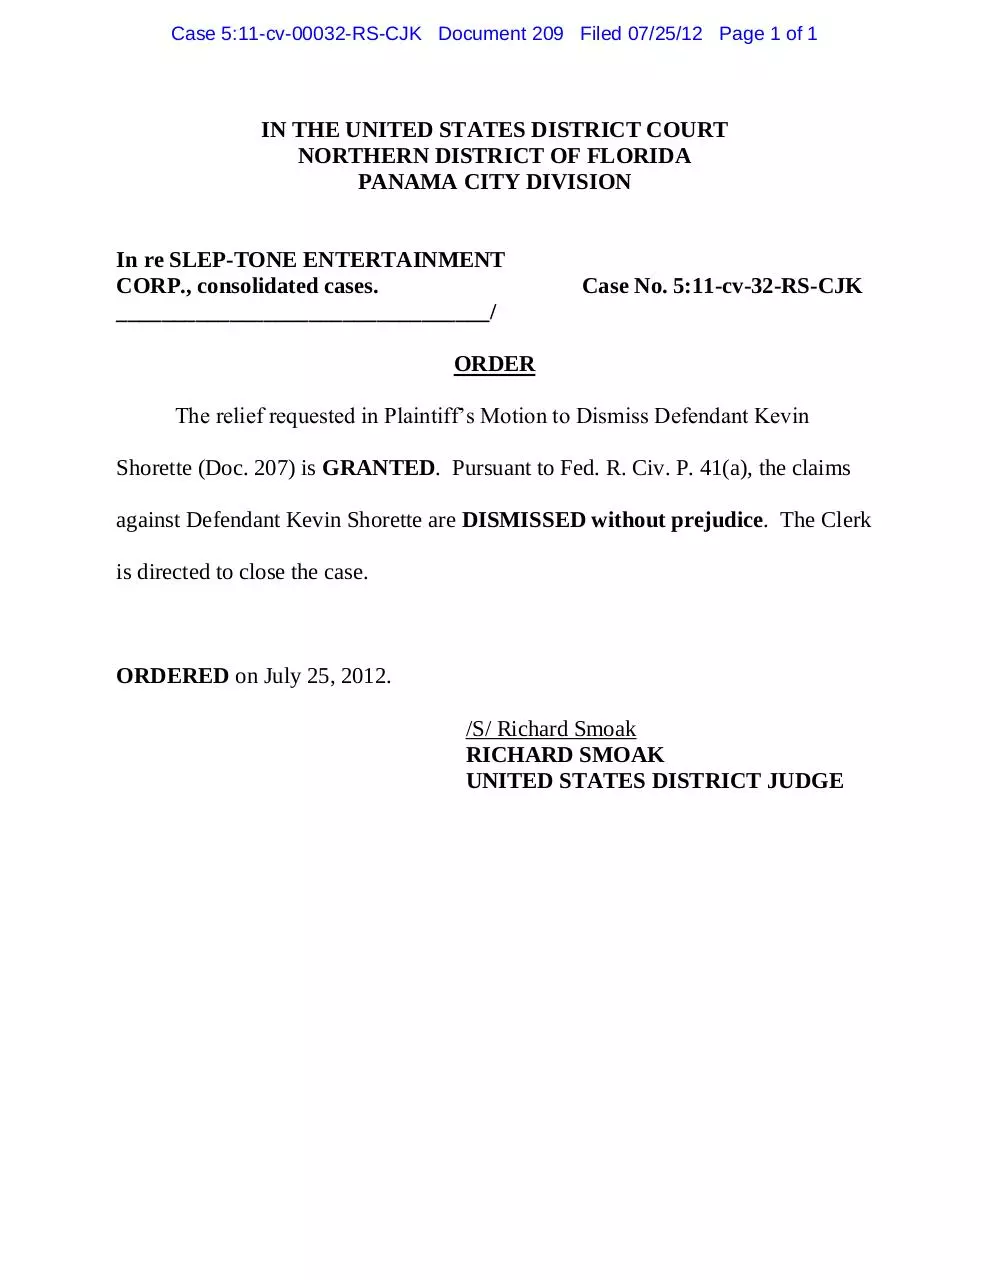 Document preview - Panama 209 Order granting Doc. 207 re dismissing Kevin Shorette wo prejudice.pdf - Page 1/1